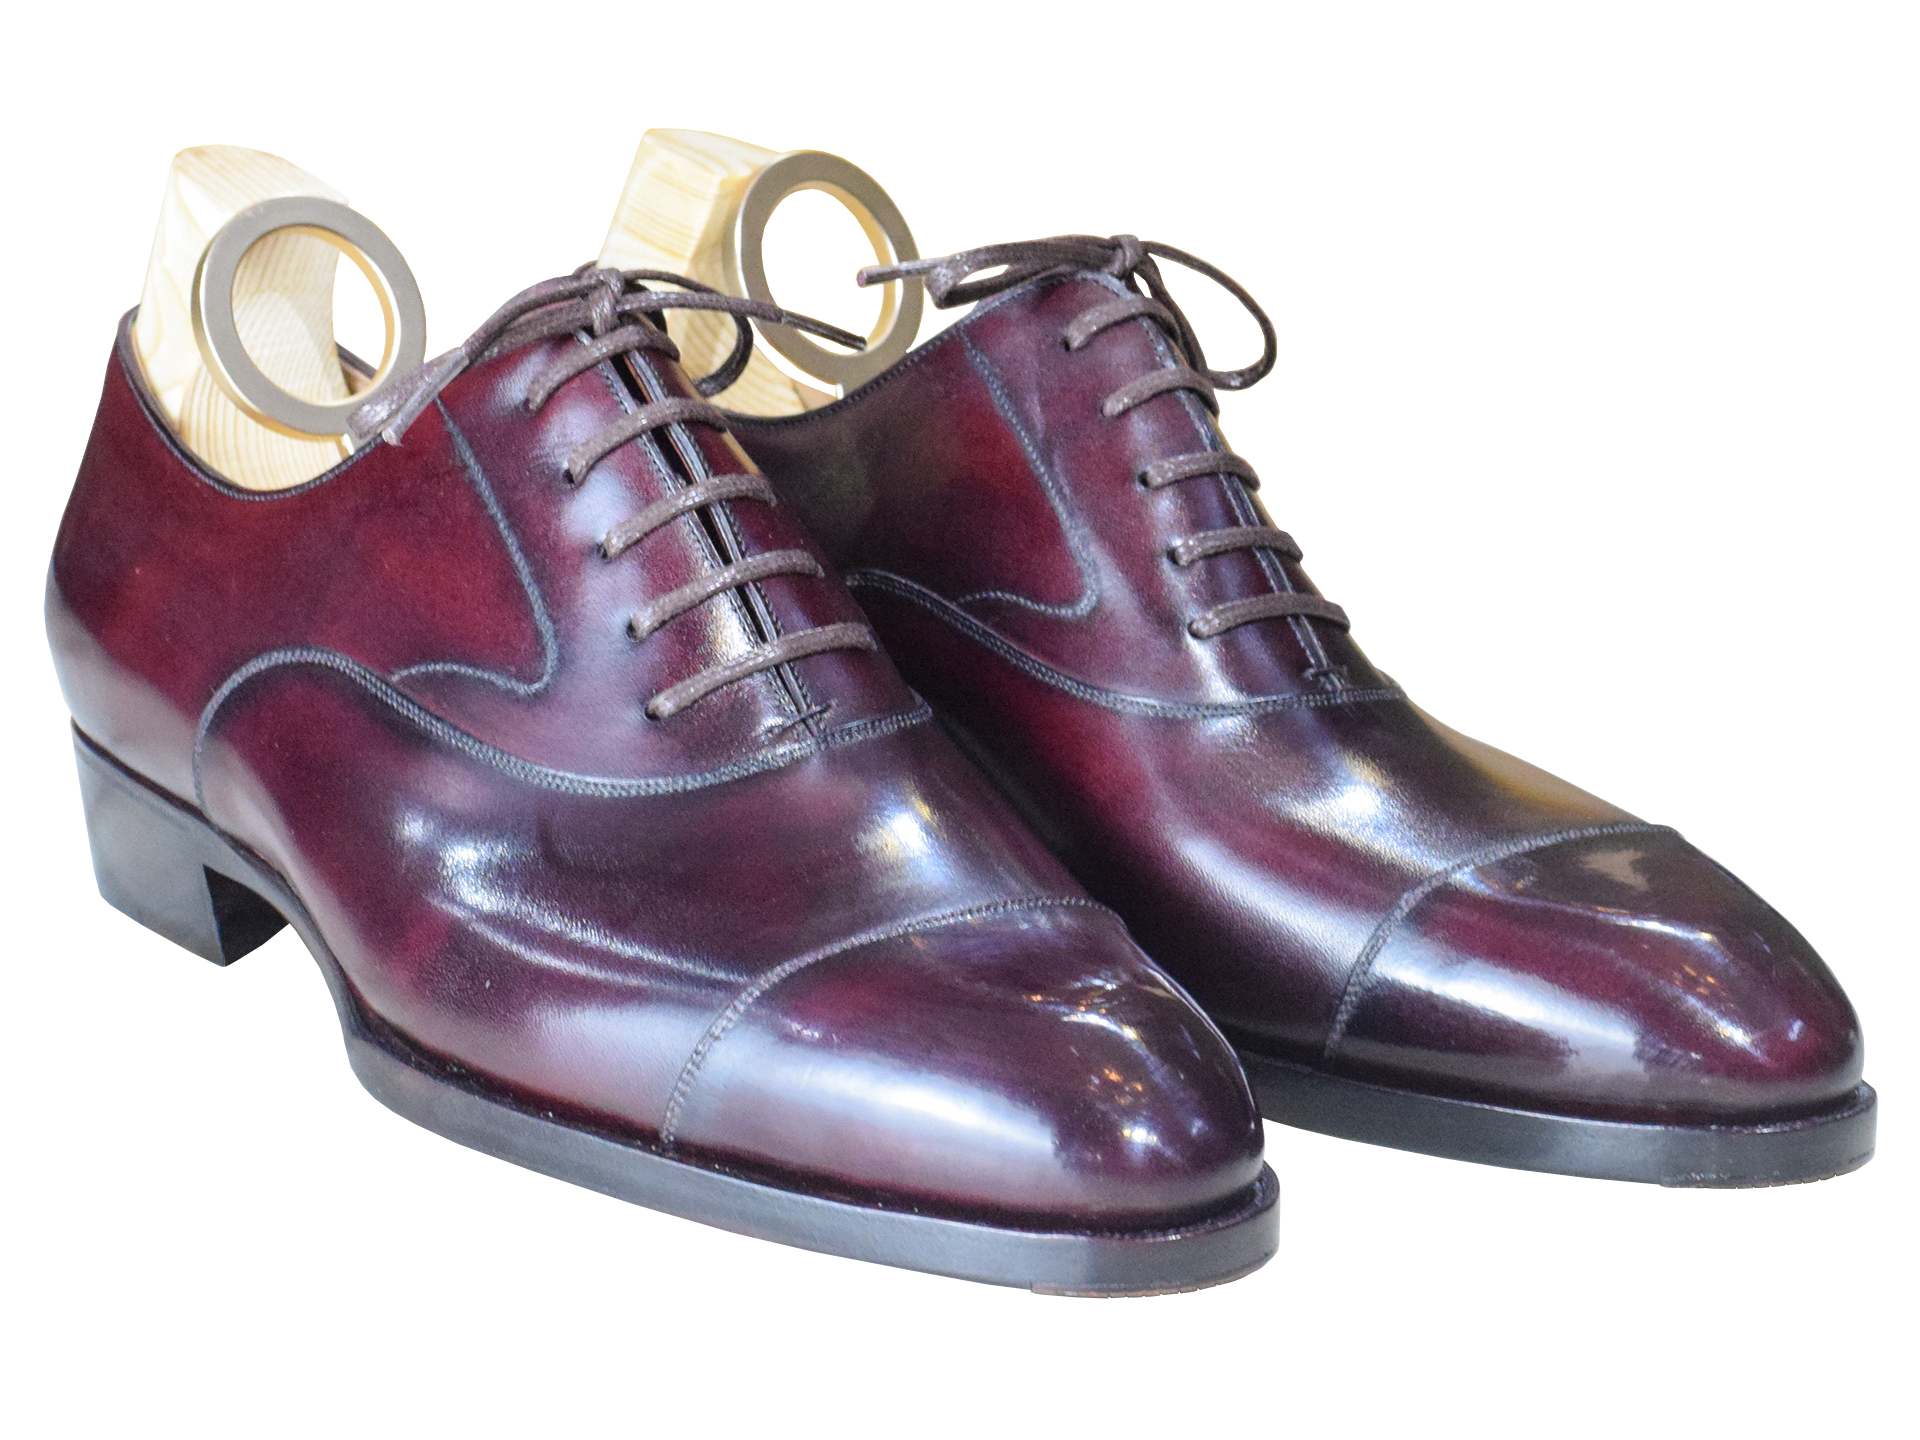 Oxford Captoe shoes - Patina